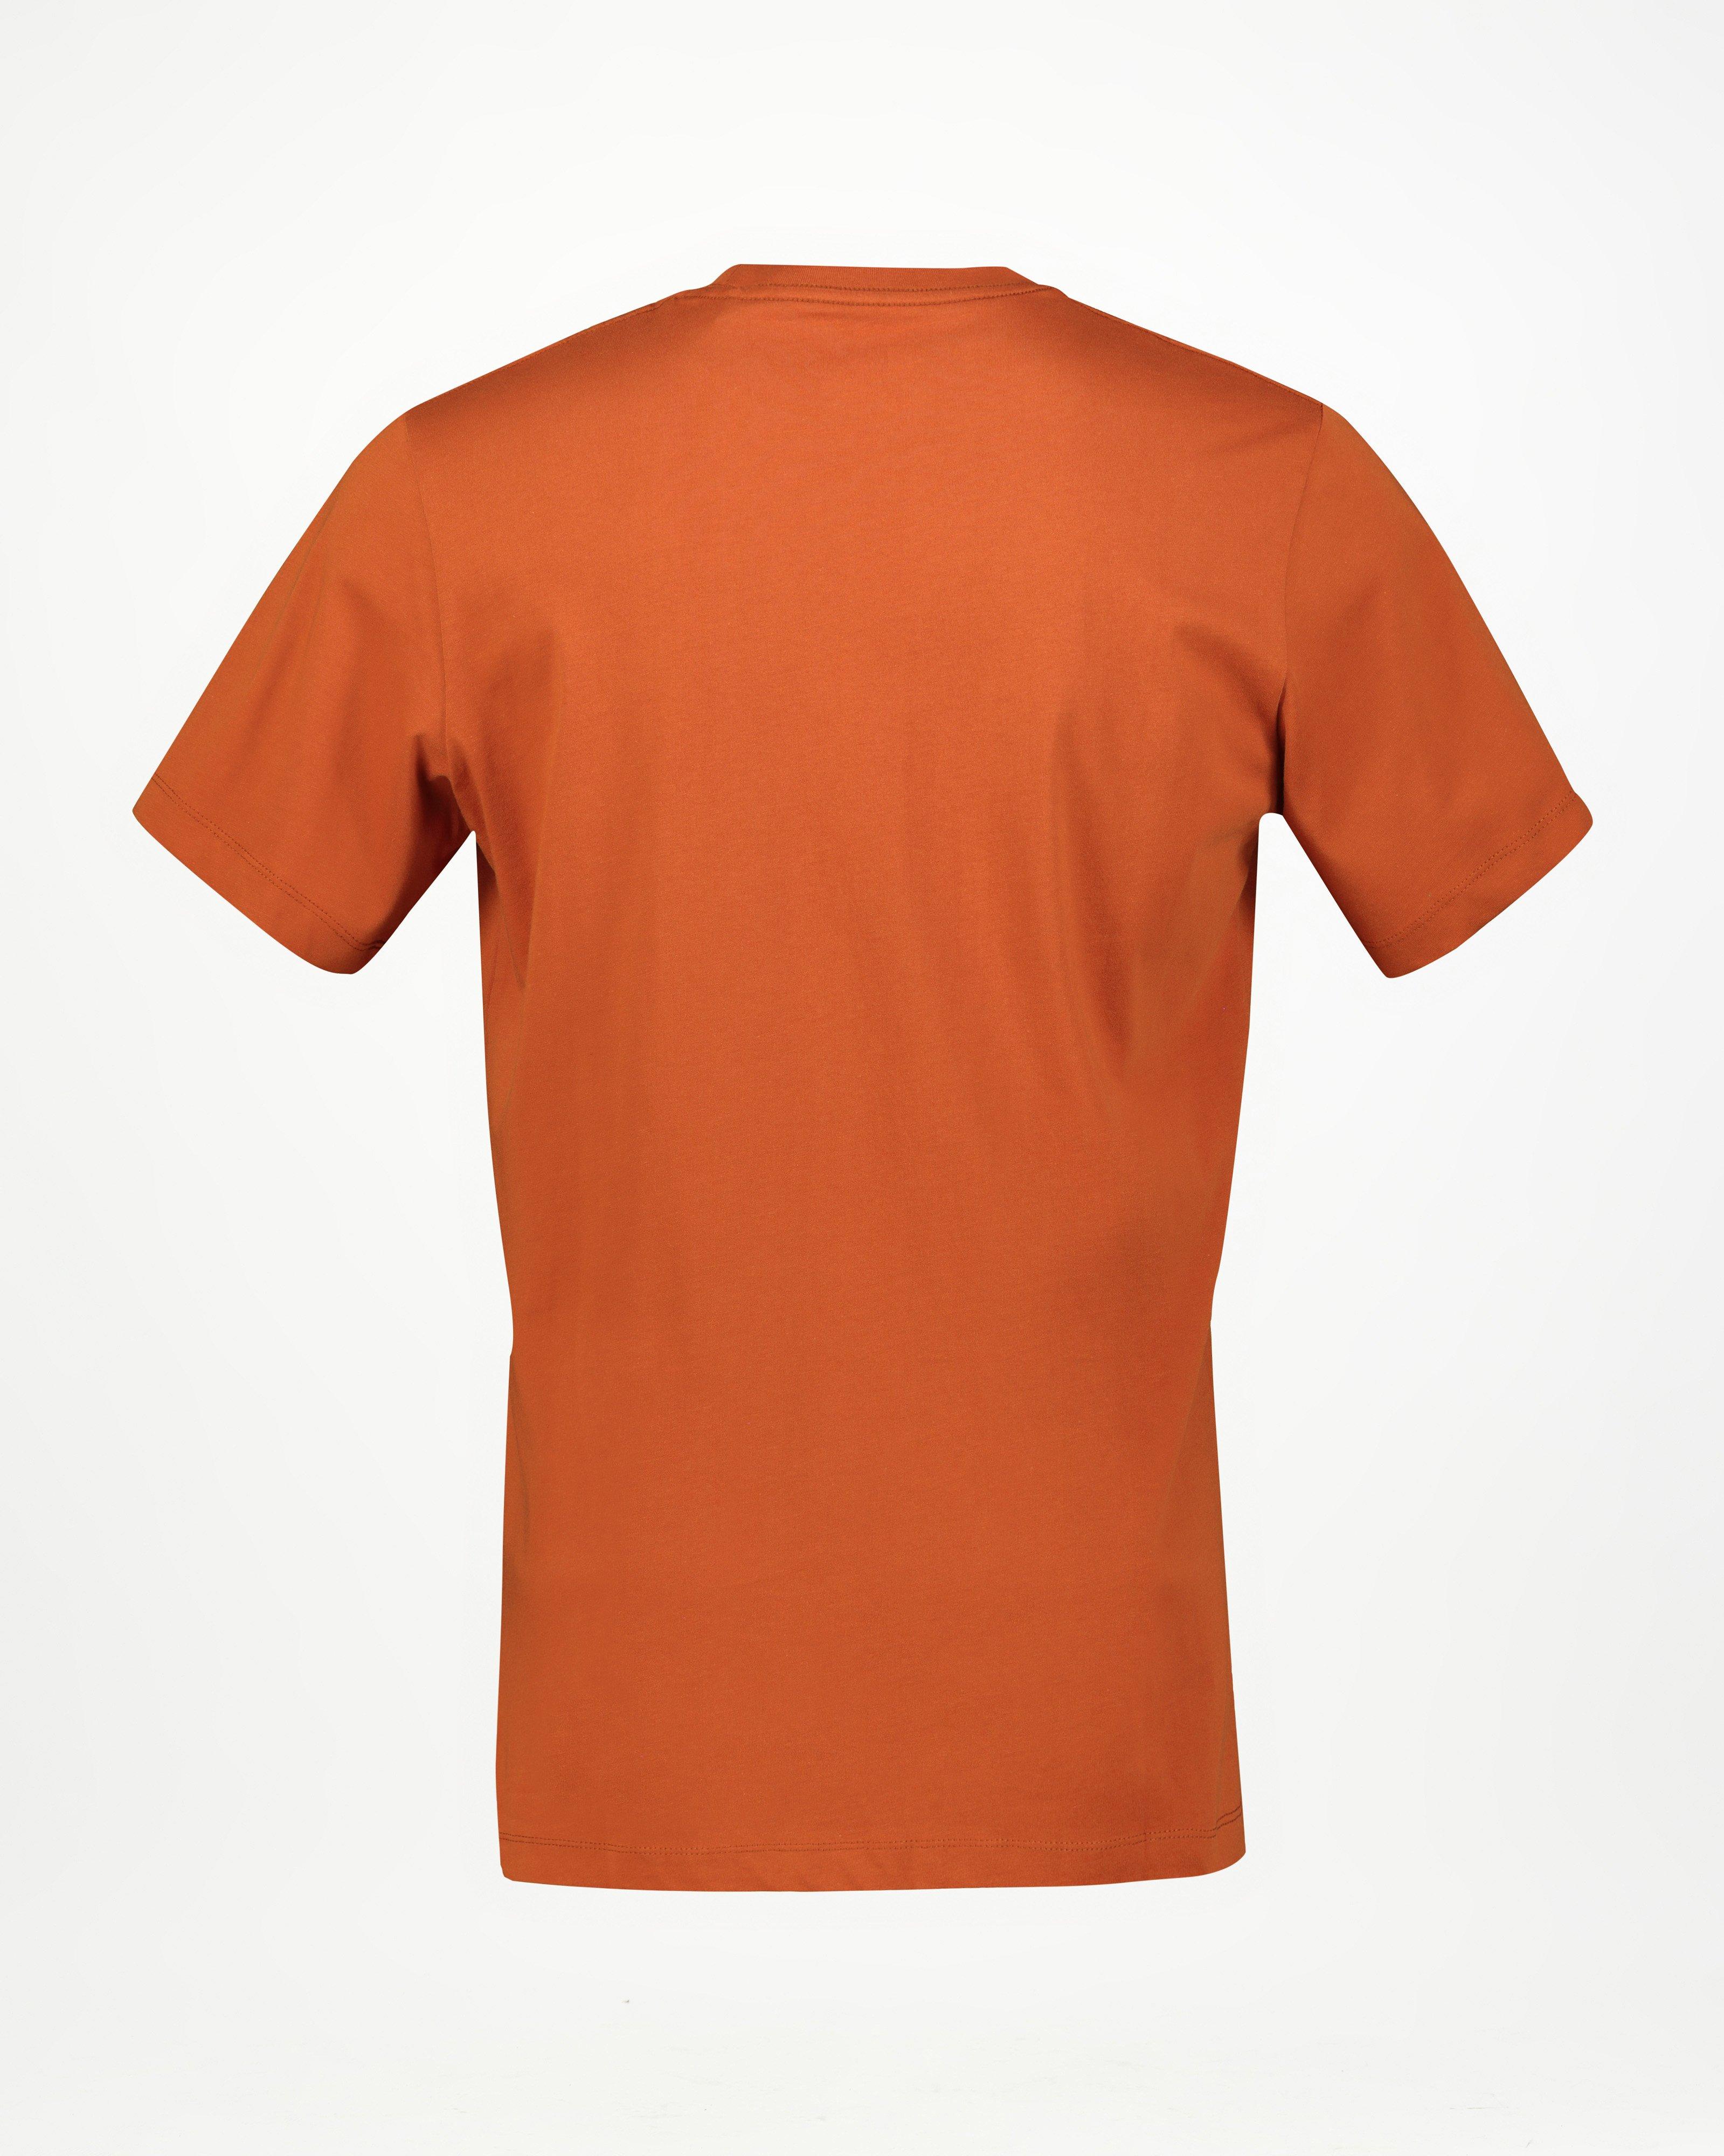 Jack Wolfskin Men’s Essential Cotton T-shirt  -  Berry